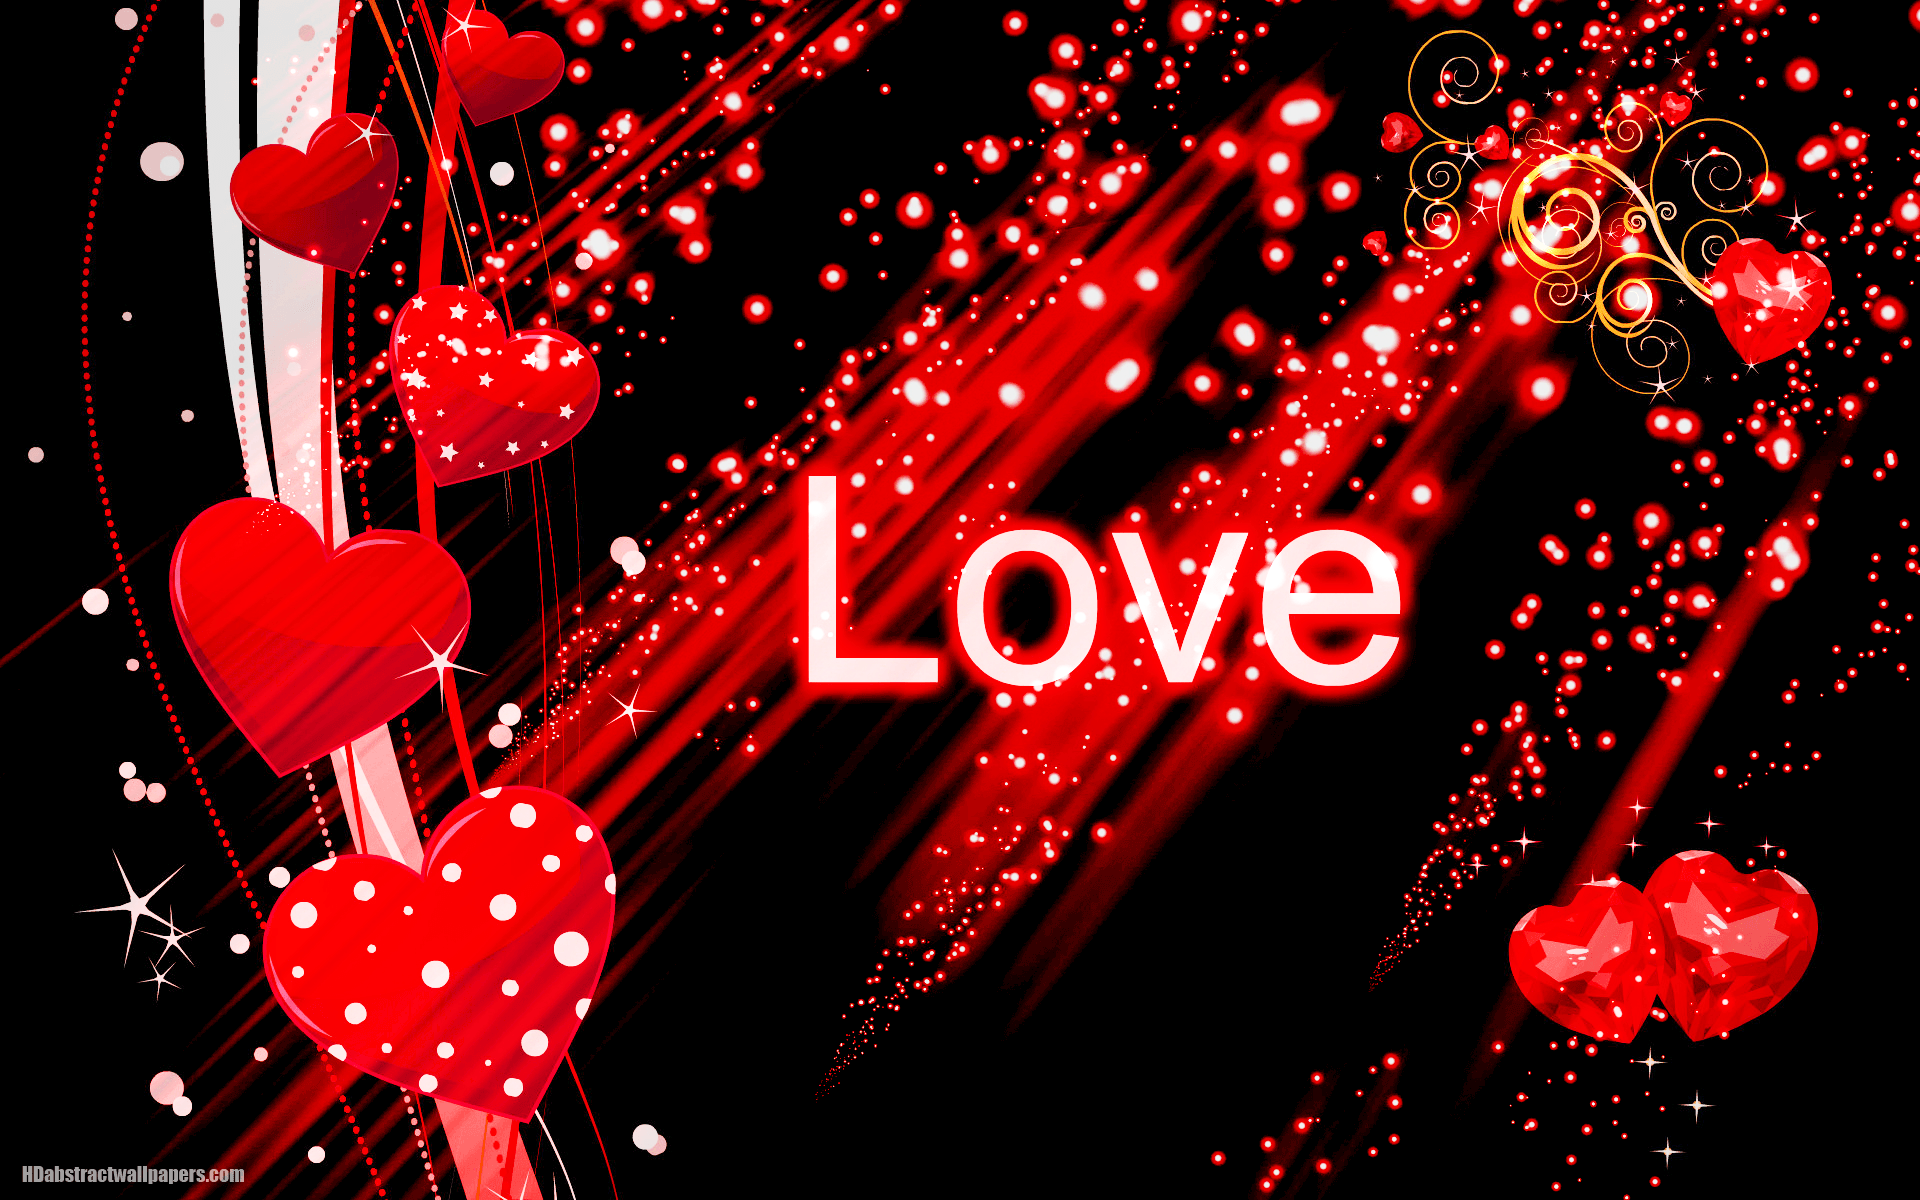 Wallpaper Of Love Hearts